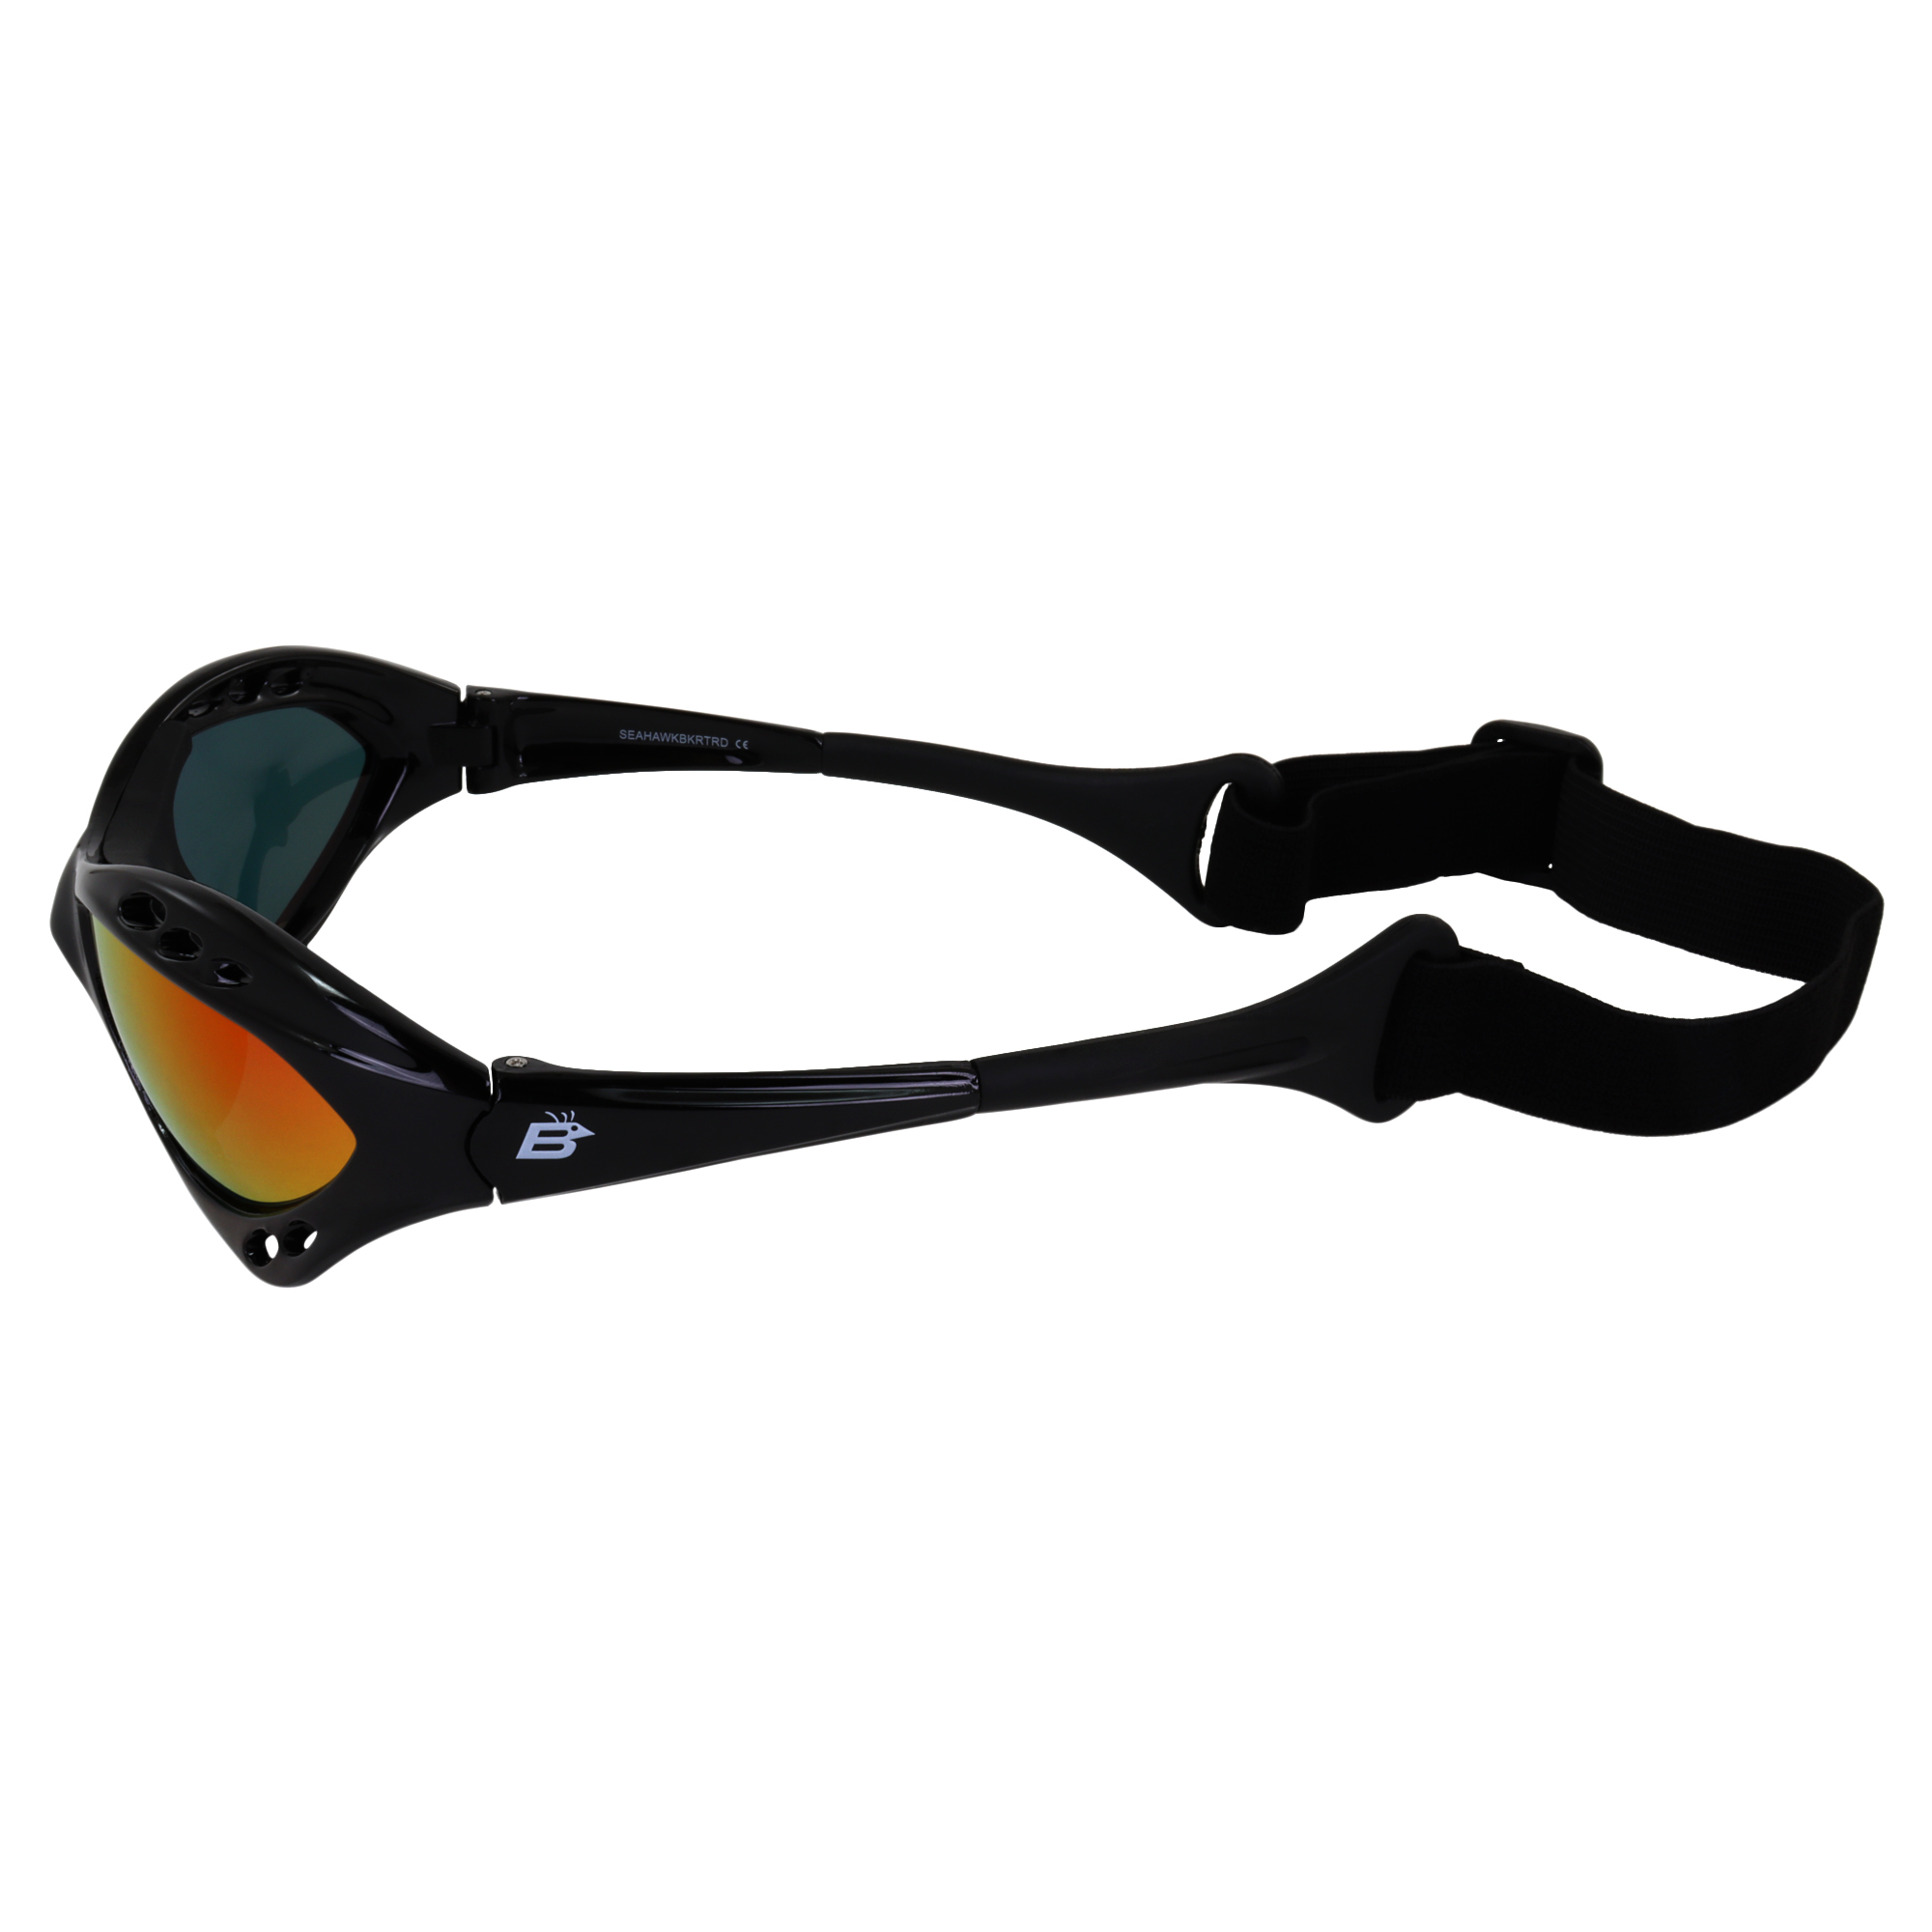 3 Pairs Birdz Seahawk Padded Polarized Sunglasses w/Strap Water Sports Surfing Kayaking Jetski Silver Frame w/Smoke Lens & Black Frame w/ Red & Green Mirror Lenses - image 5 of 7